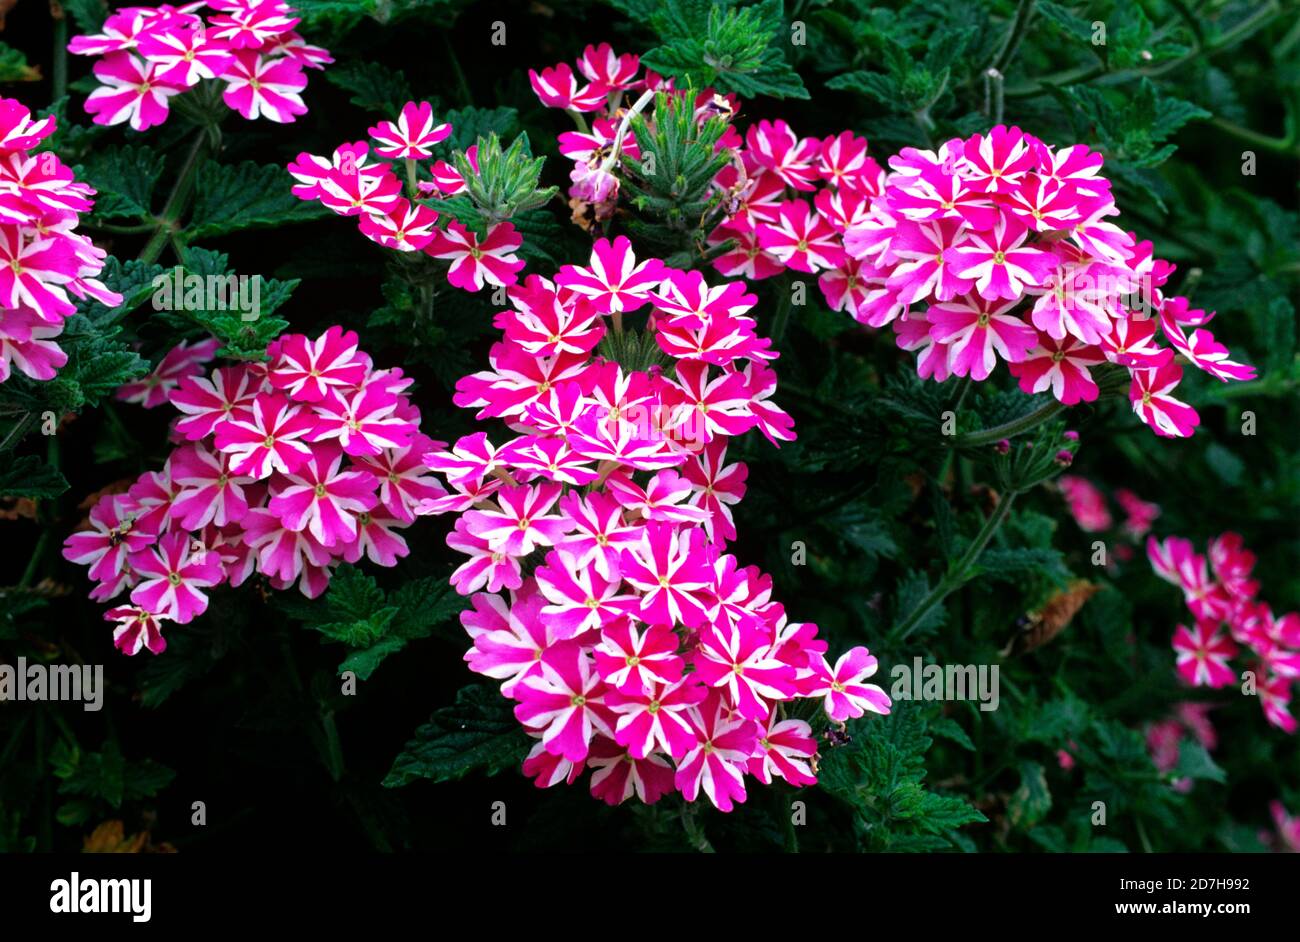 Verbena temari (Verbena x hybrida) 'Violet Star' Stockfotografie - Alamy